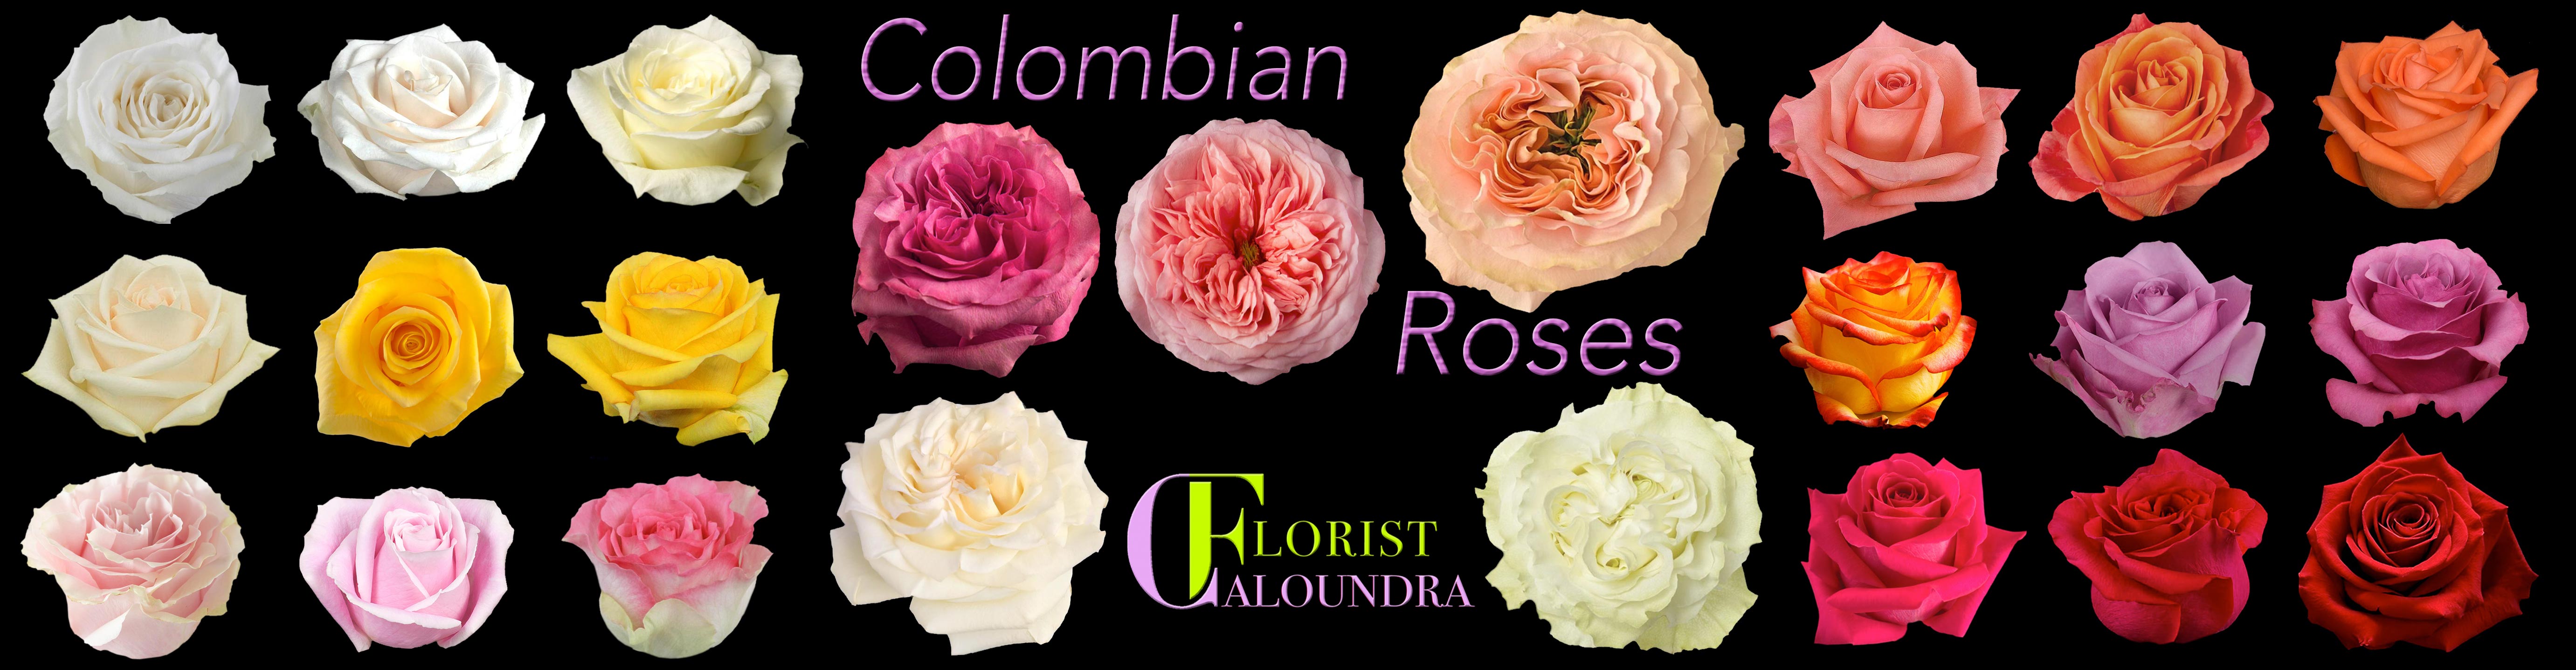 COLOMBIAN ROSES CALOUNDRA